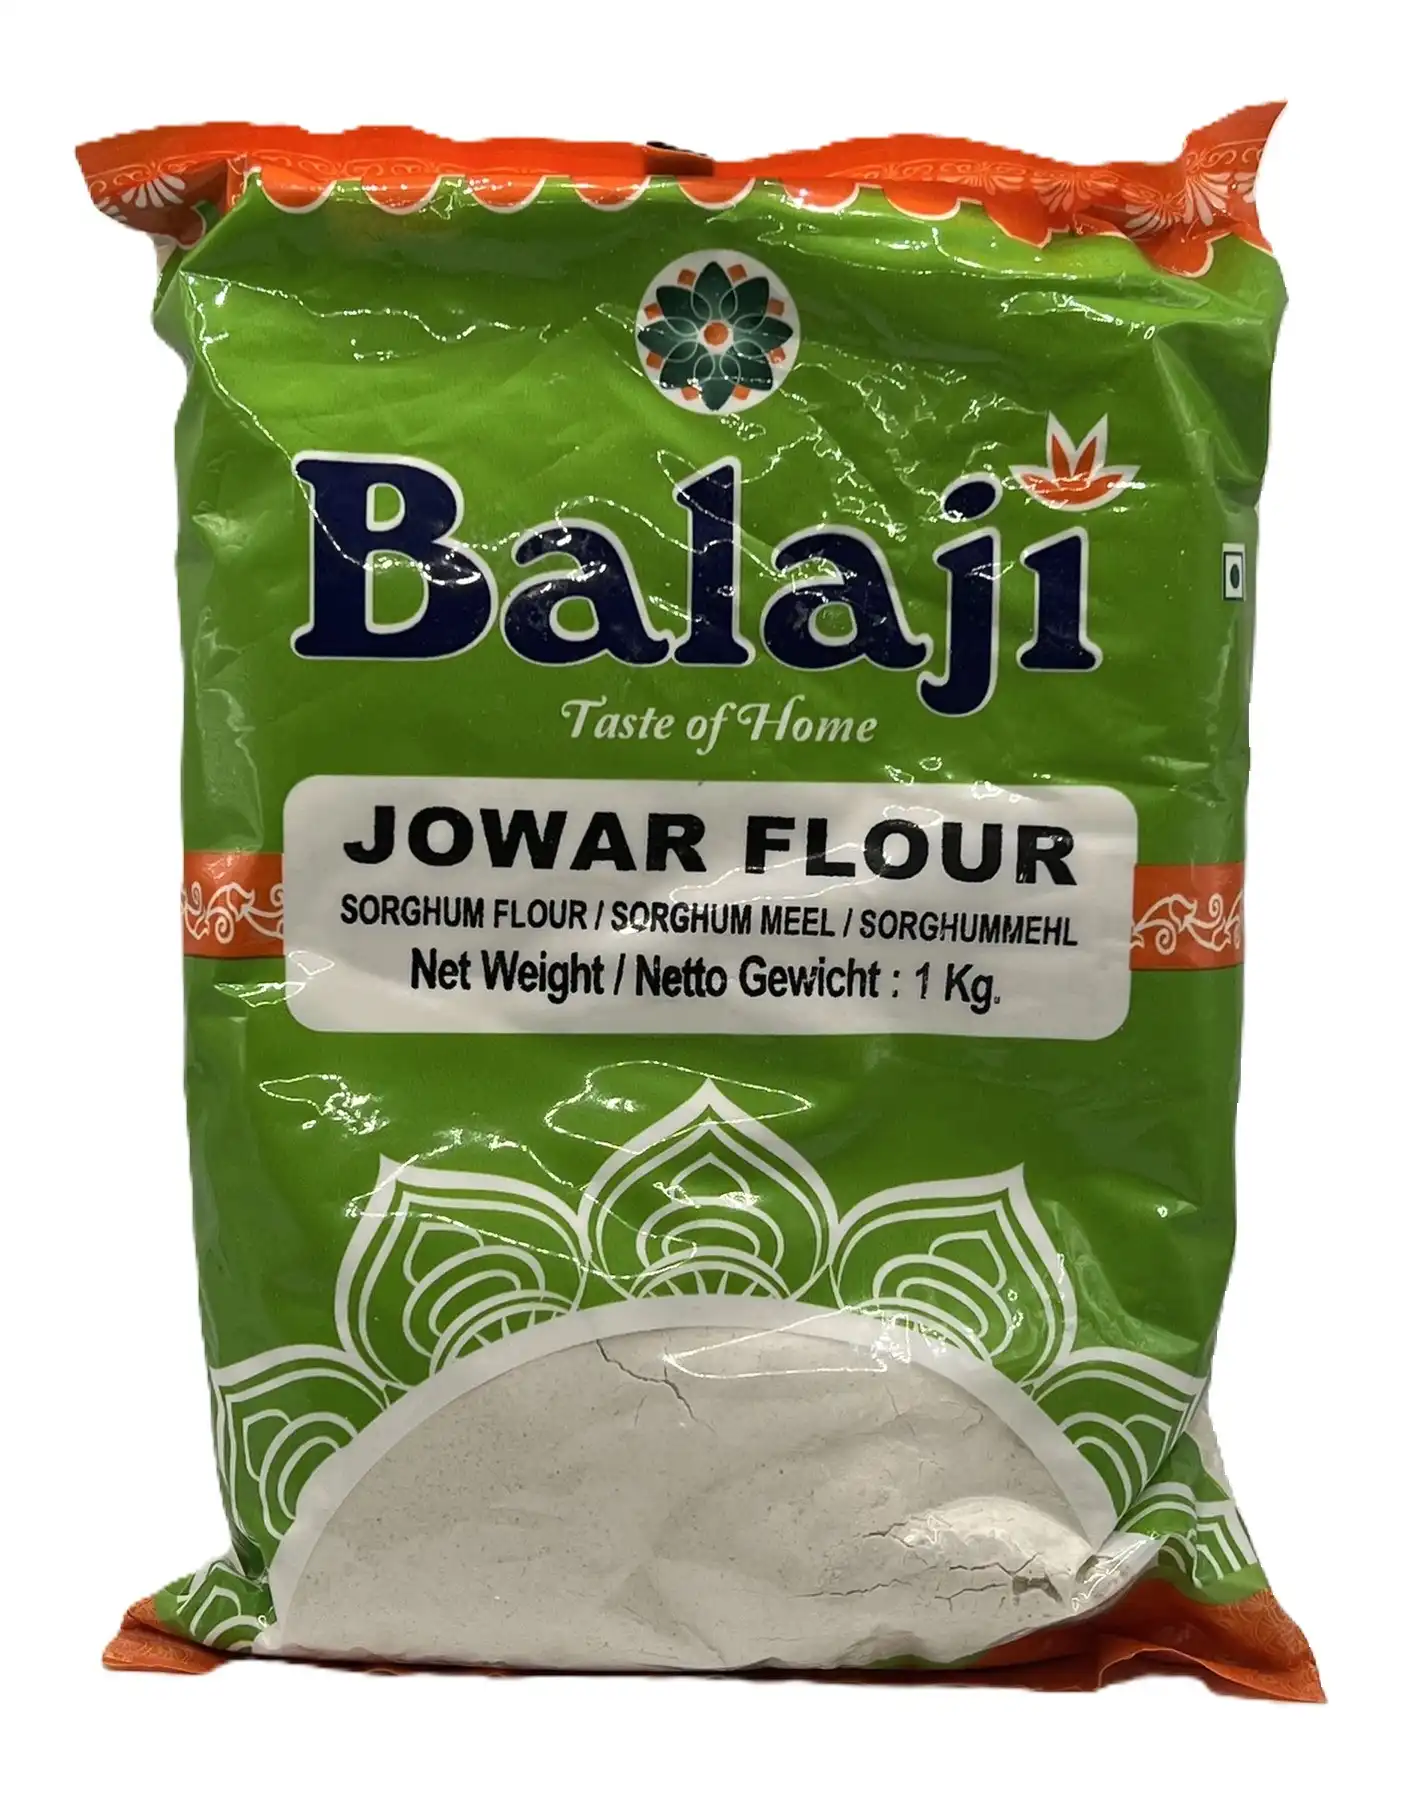 jowar flour-balaji taste of home